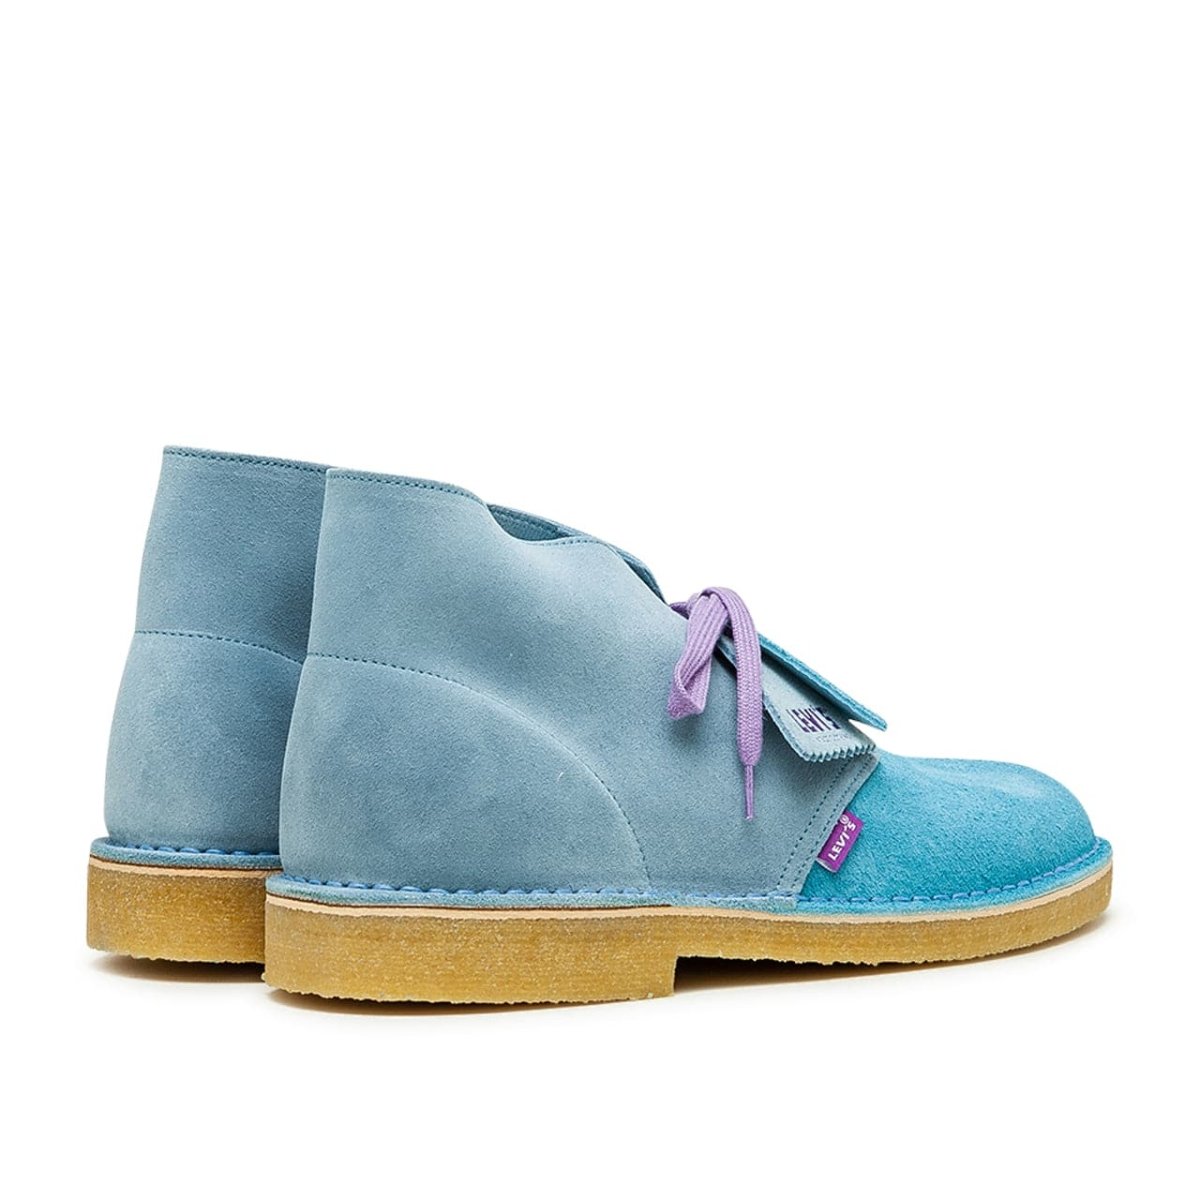 Clarks Originals x Levi's Vintage Clothing Desert Boot (Blau)  - Allike Store